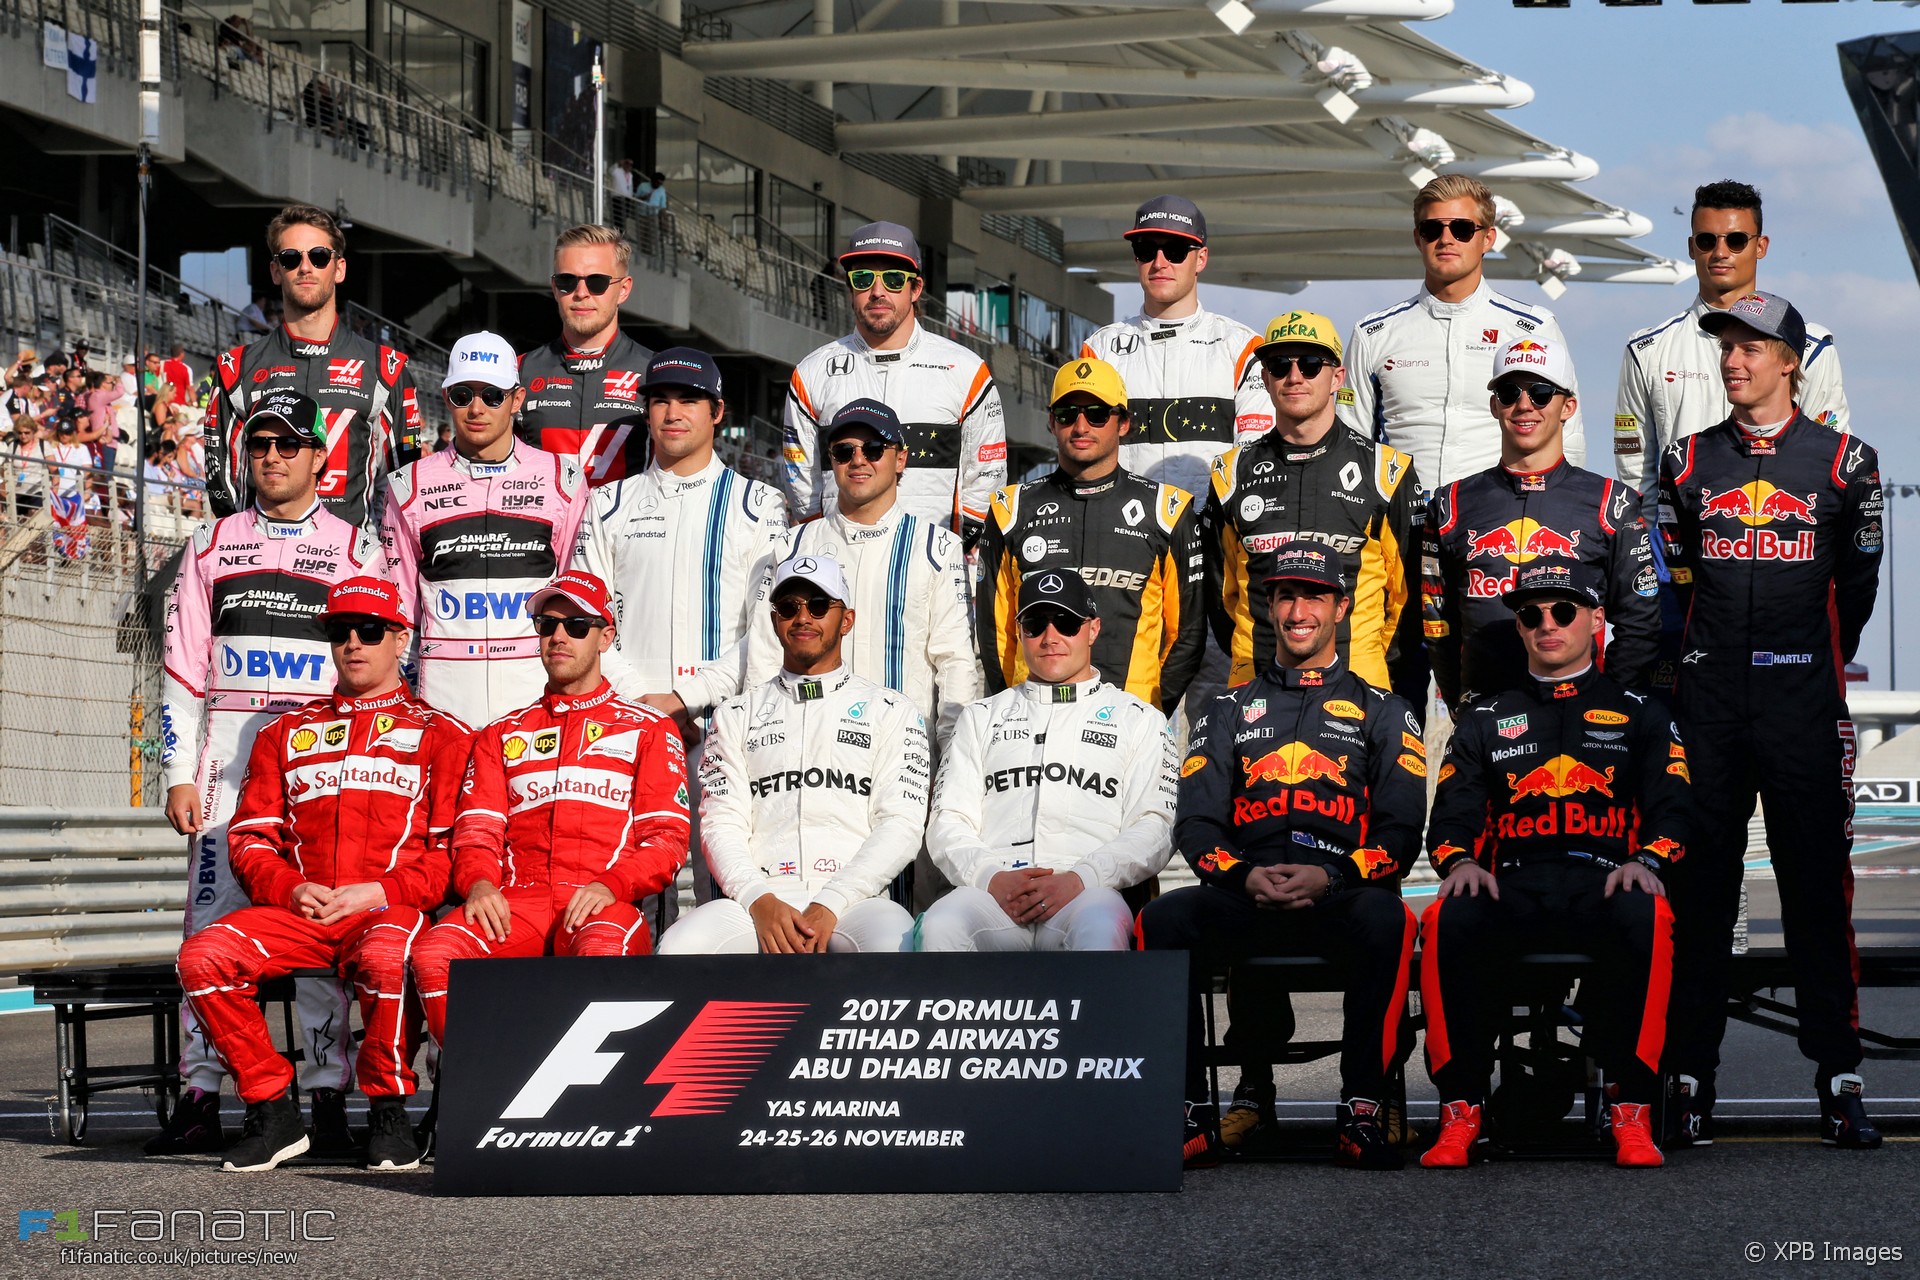 F1 drivers end-of-season photograph, Yas Marina, 2017